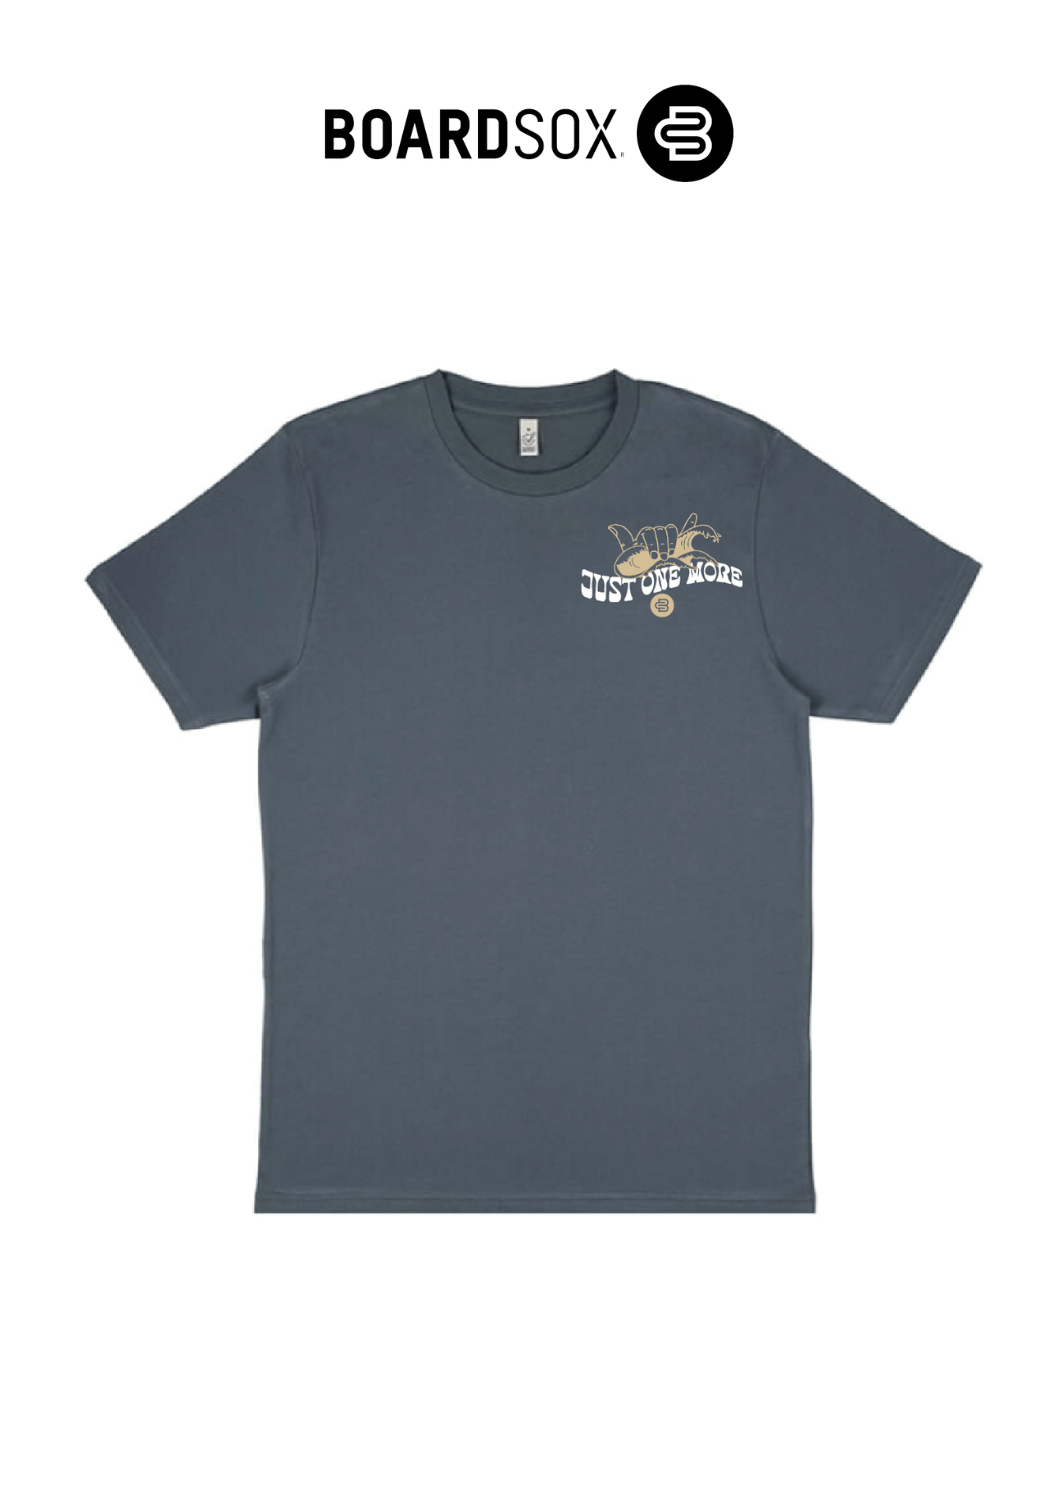 Boardsox Just One More T-Shirt - Dark Grey. 🌏 Climate Neutral - BOARDSOX® AustraliaT-Shirt